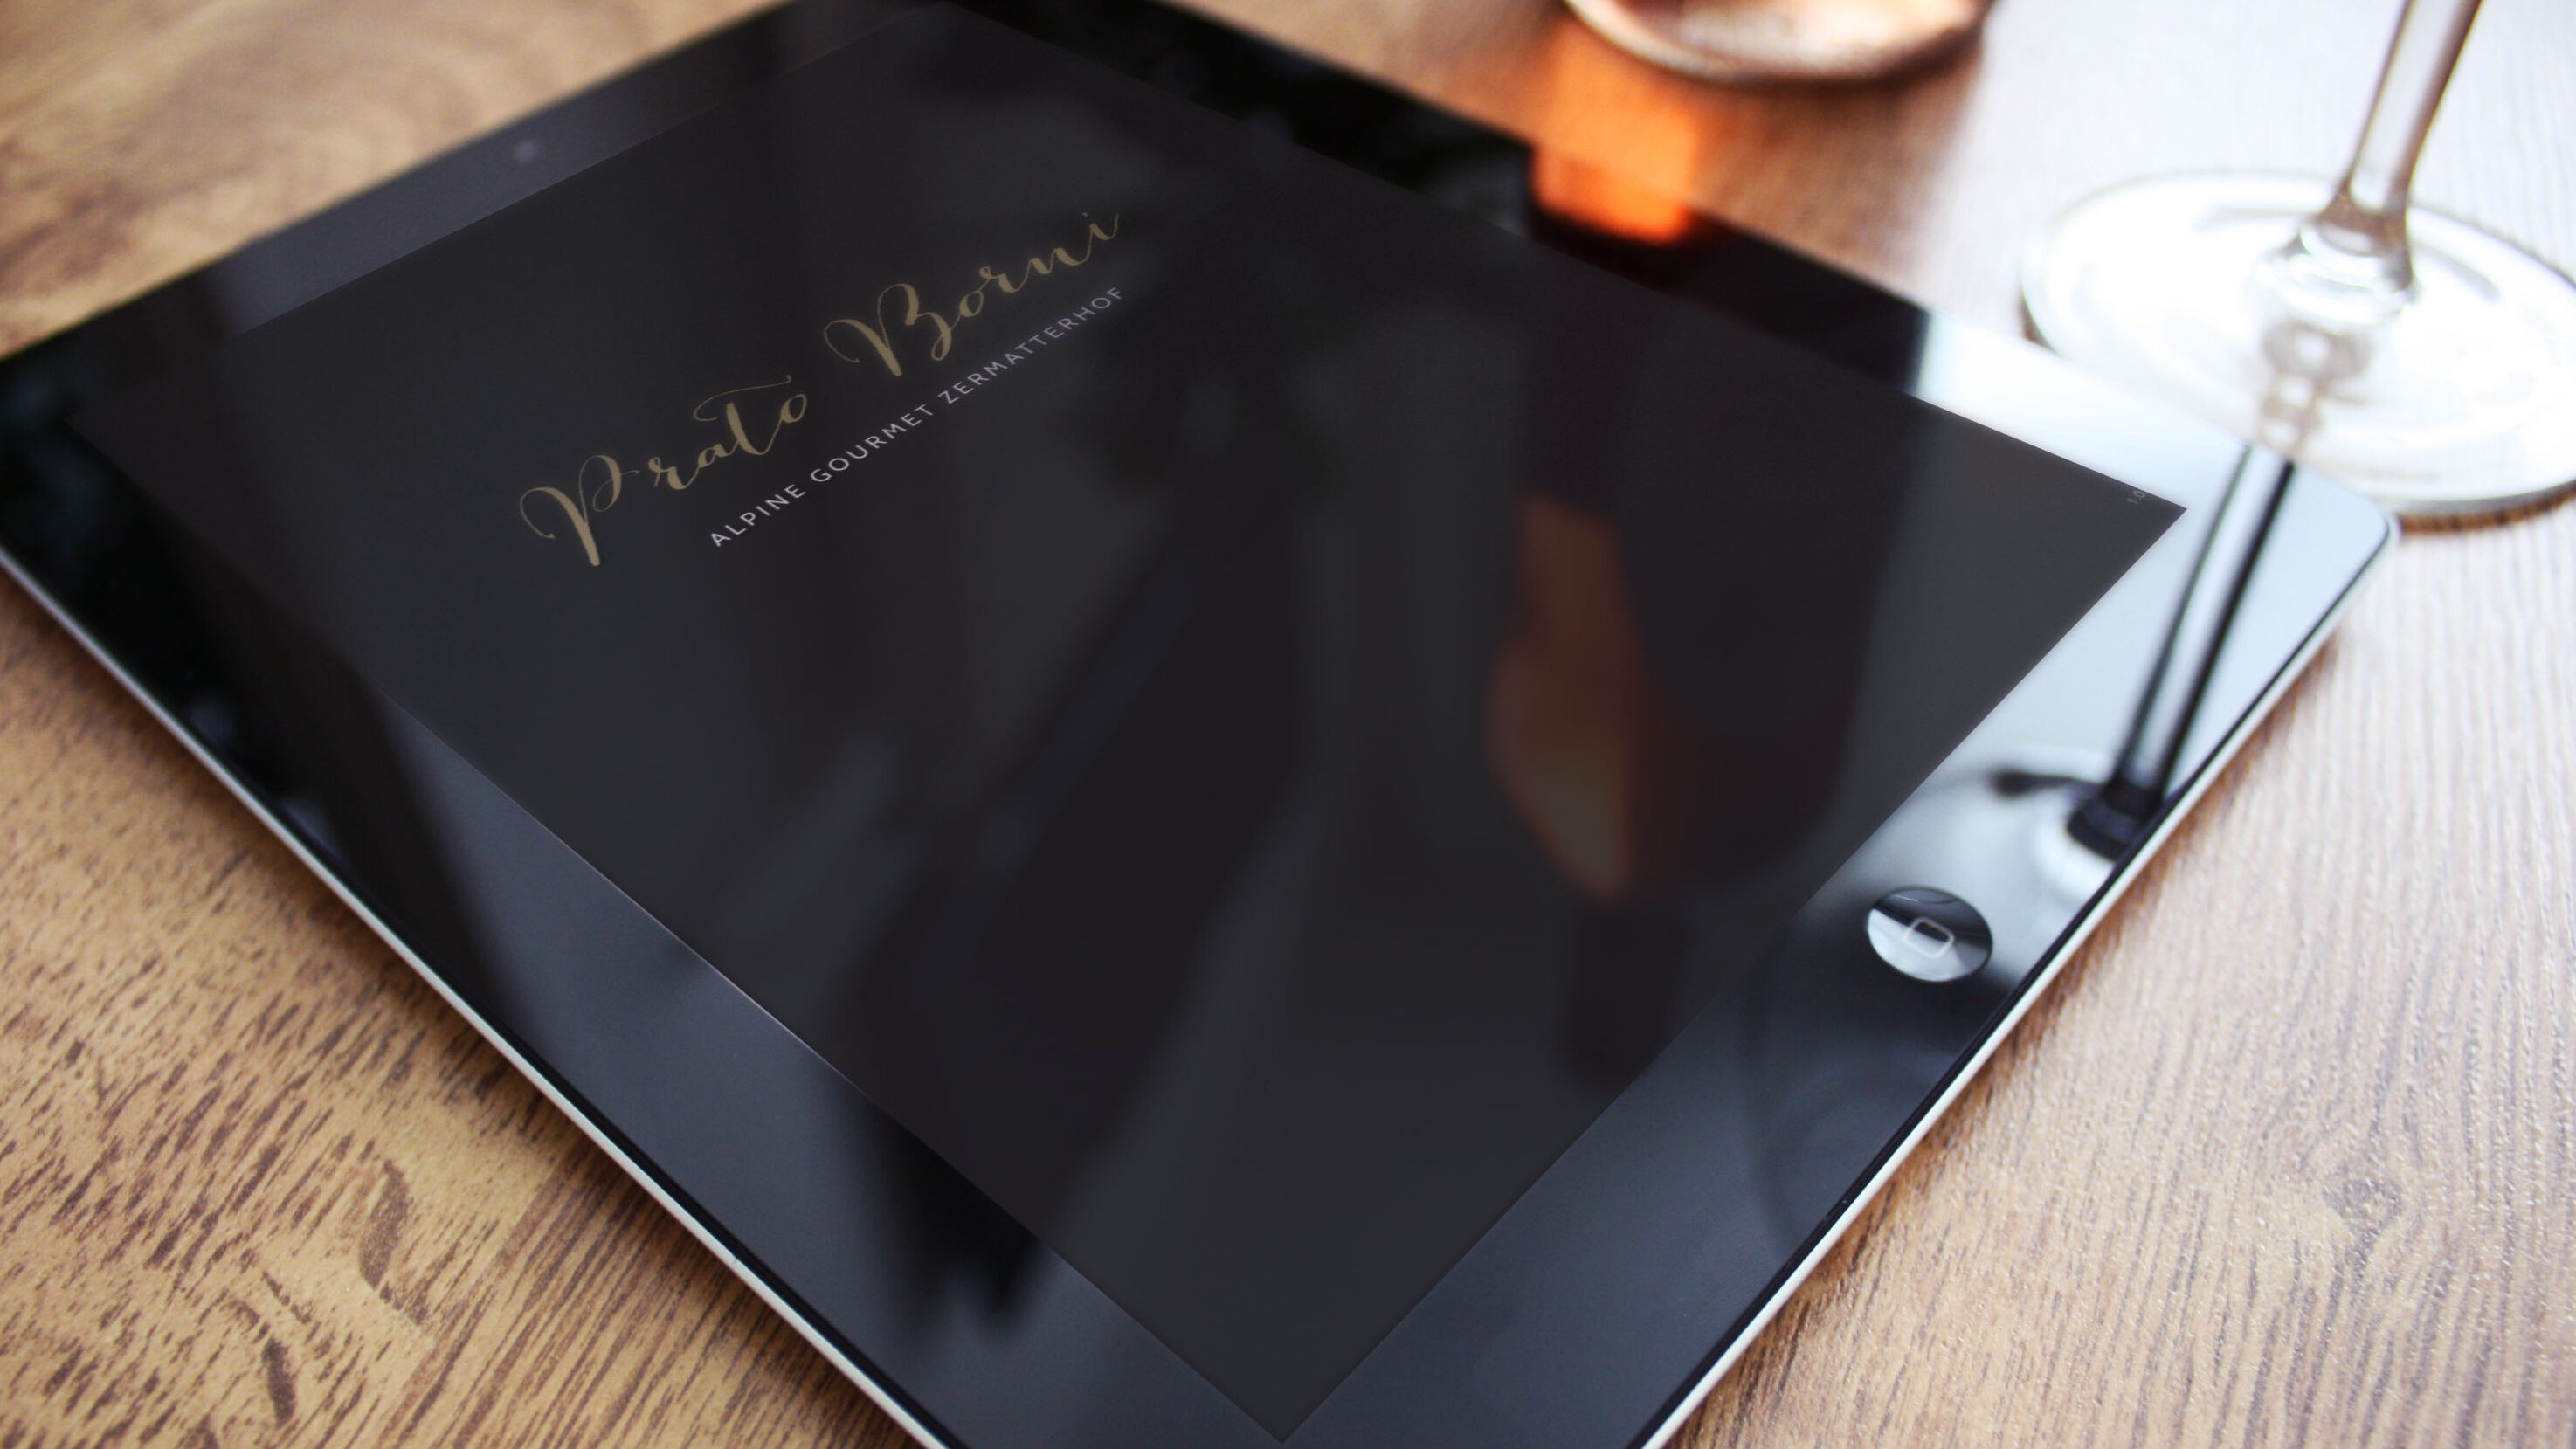 Prato Borni Speisekarte iPad by Werbeagentur Bern Blitz & Donner